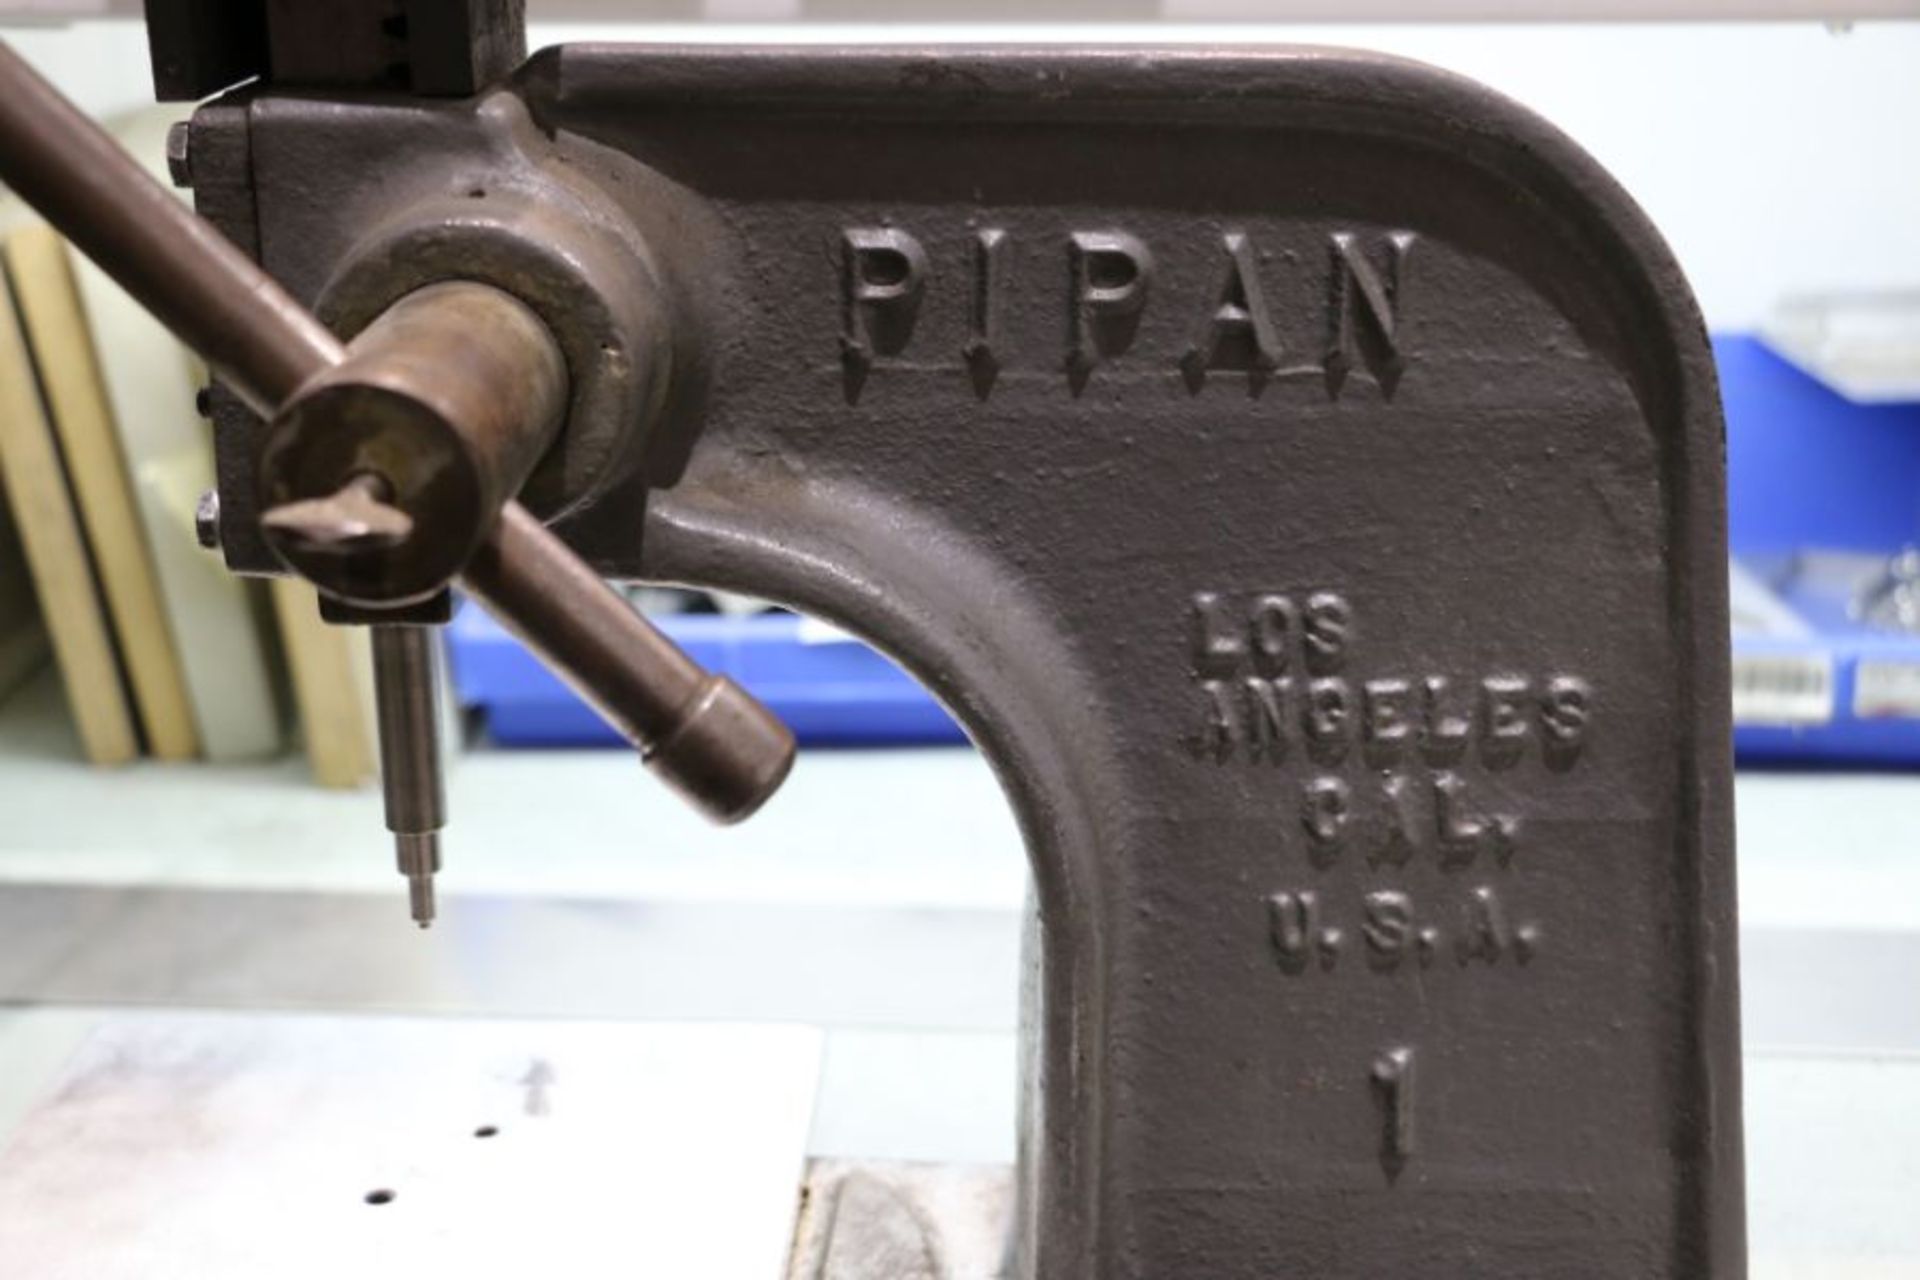 Pipan Arbor Press - Image 4 of 4